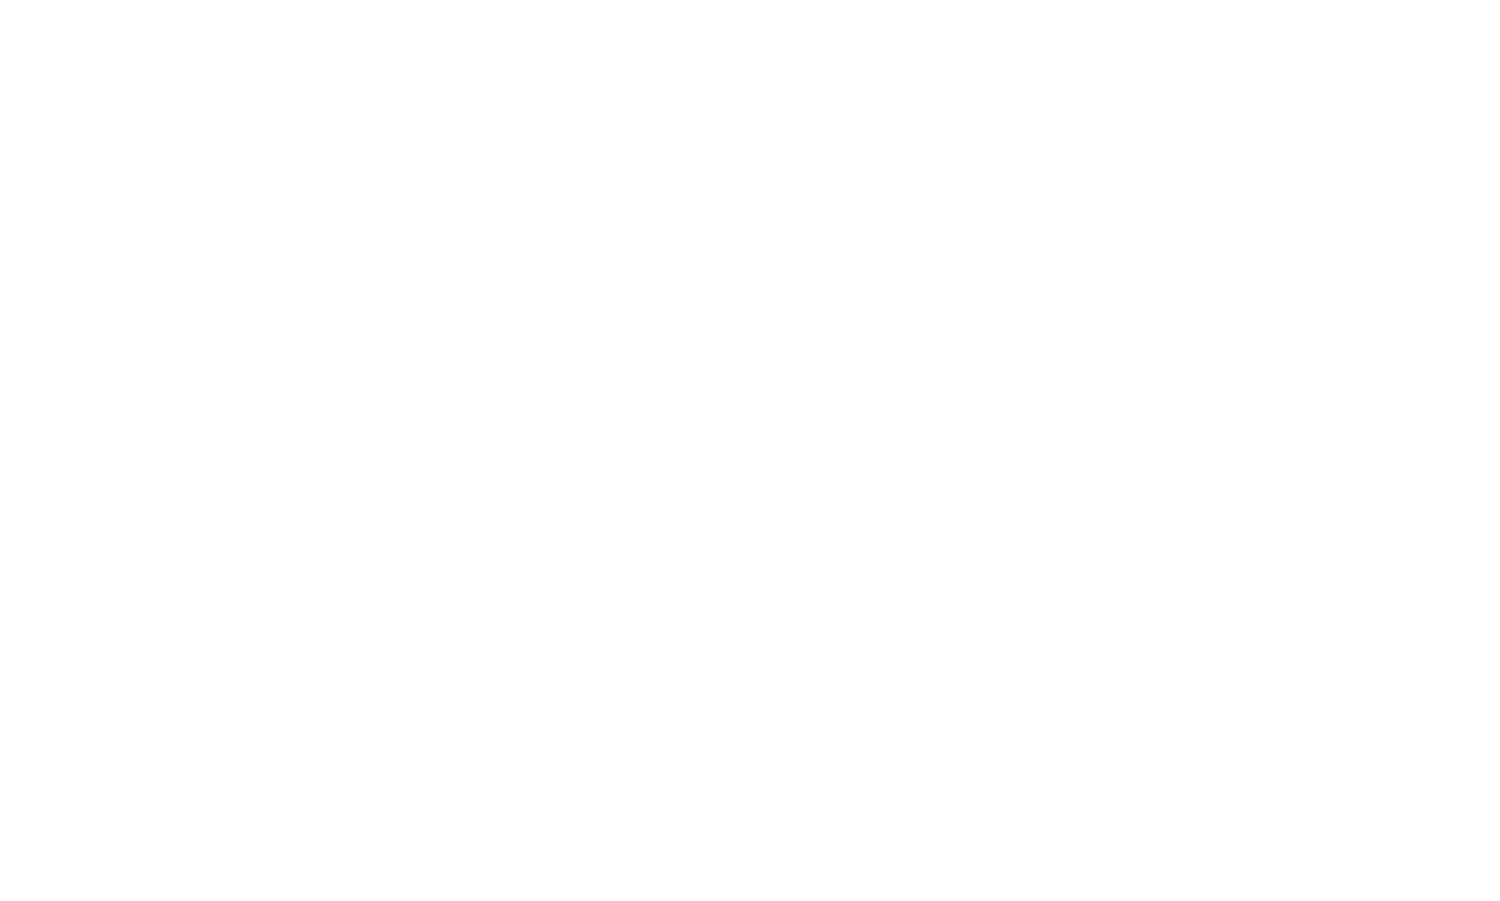 Christ Church Winchester Schools Team